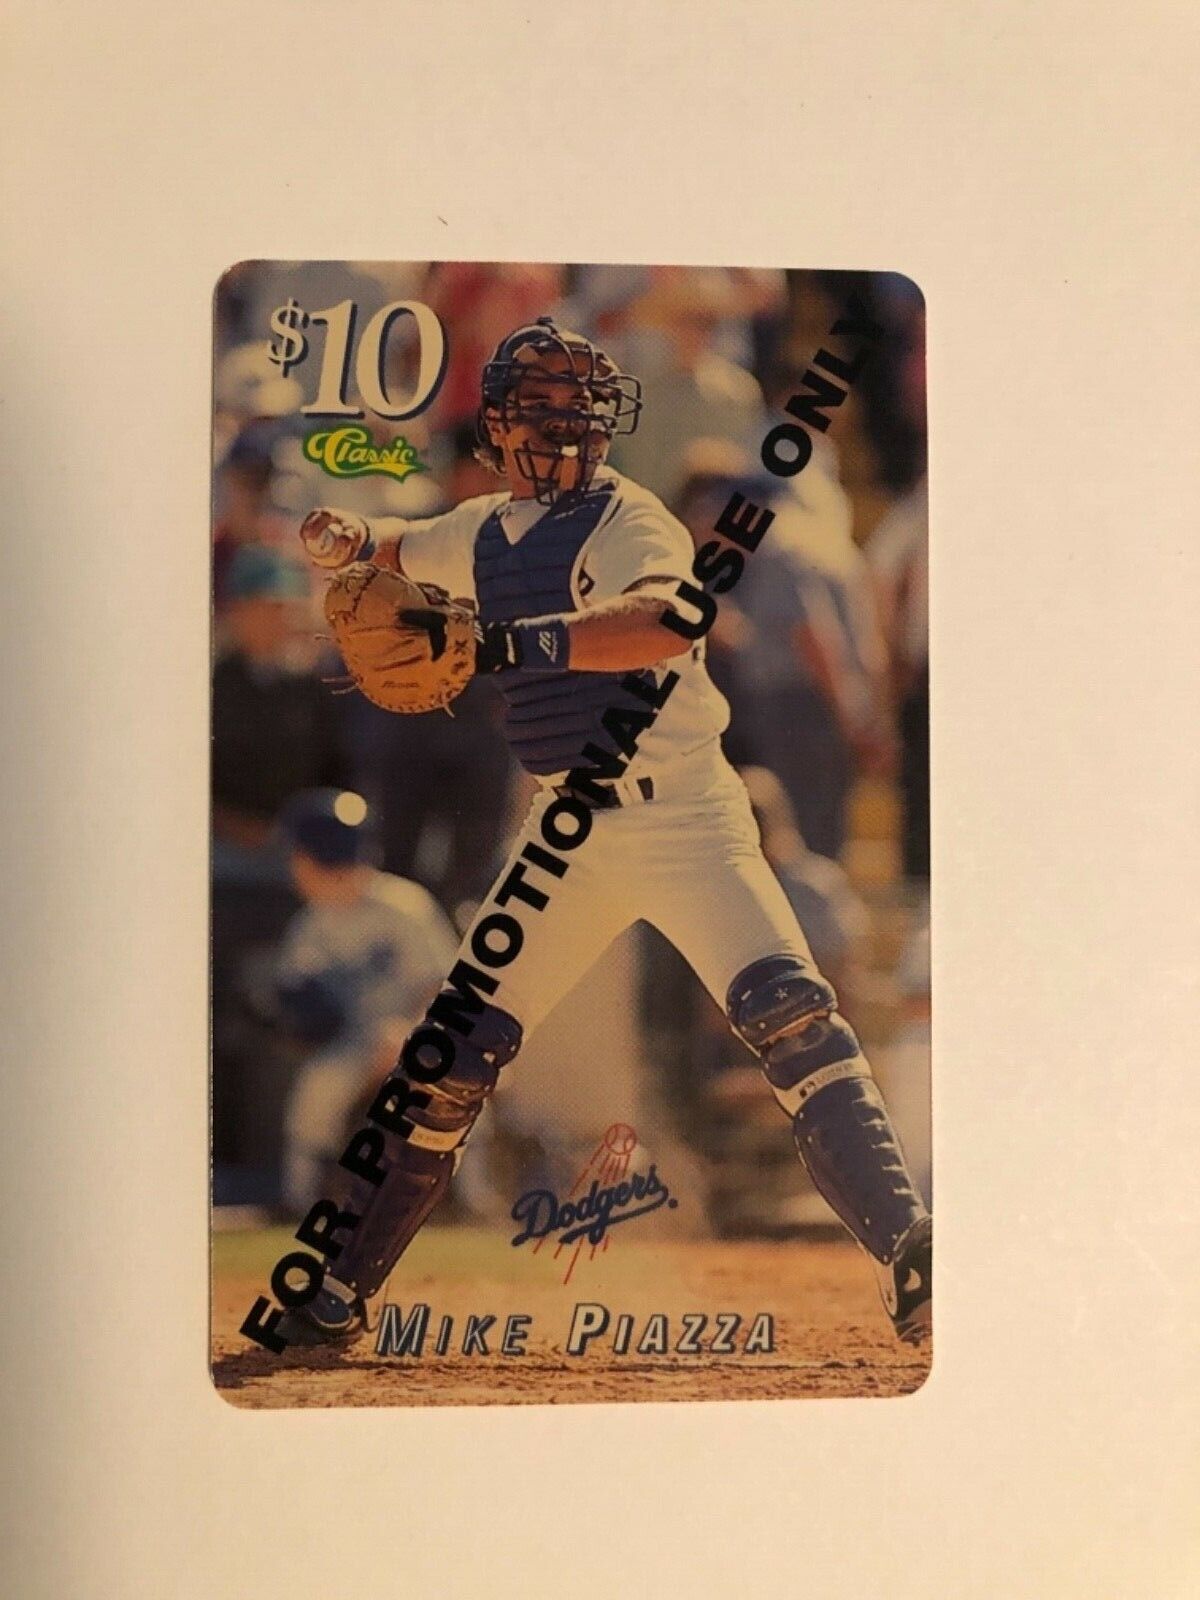 Mike Piazza Promo Phone Card $10